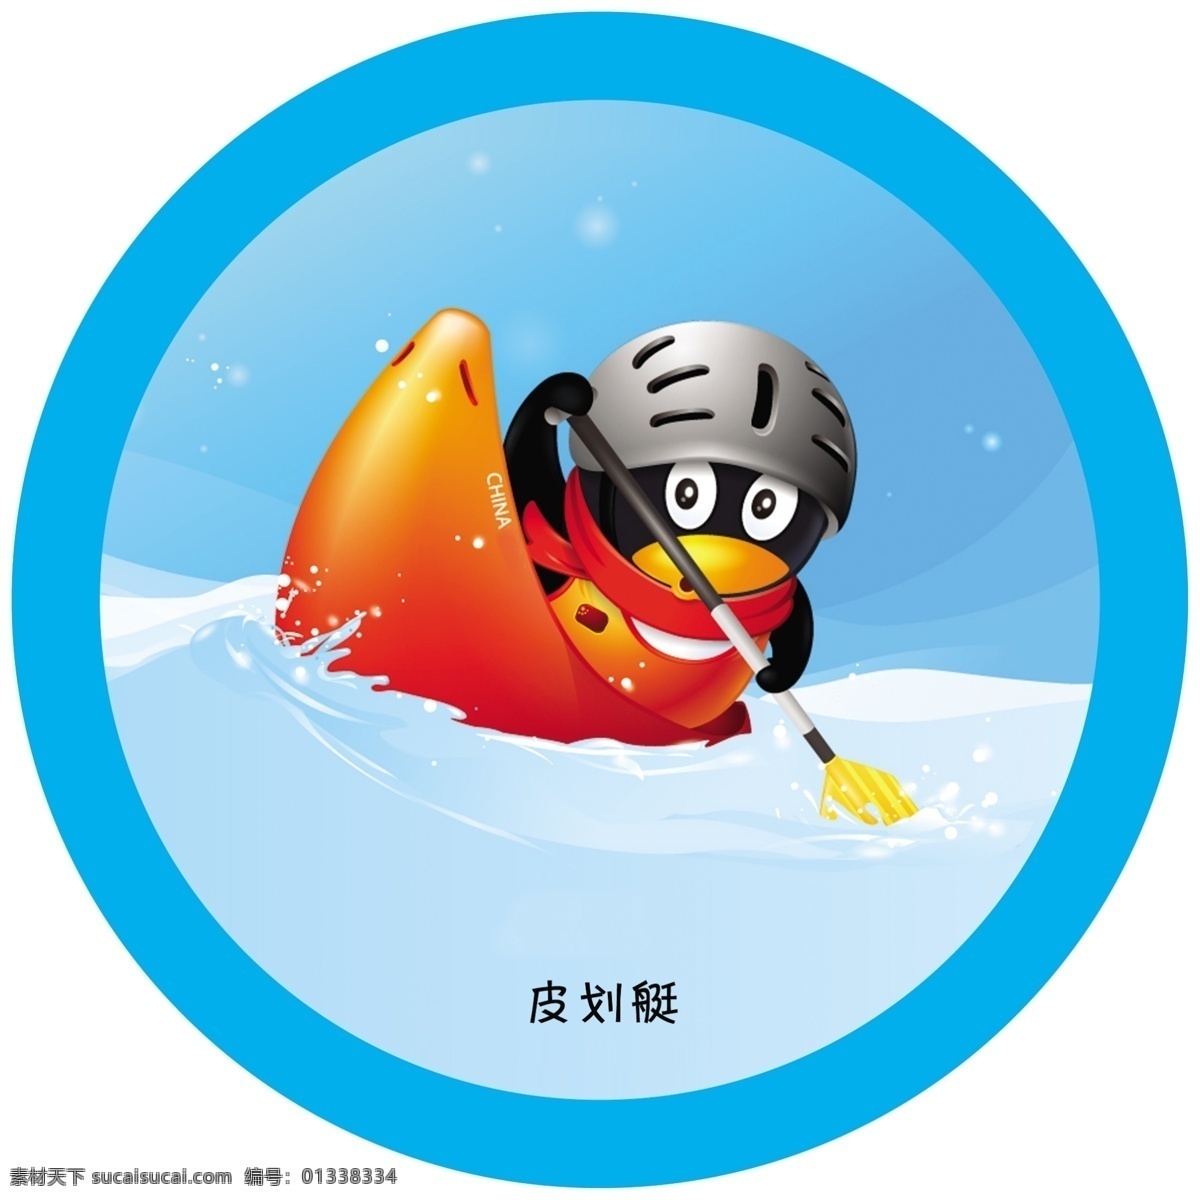 qq 插画 船 底纹 广告设计模板 蓝色 企鹅 皮划艇 奥运项目 运动项目 浆 水 设计素材 圆形 源文件 其他海报设计